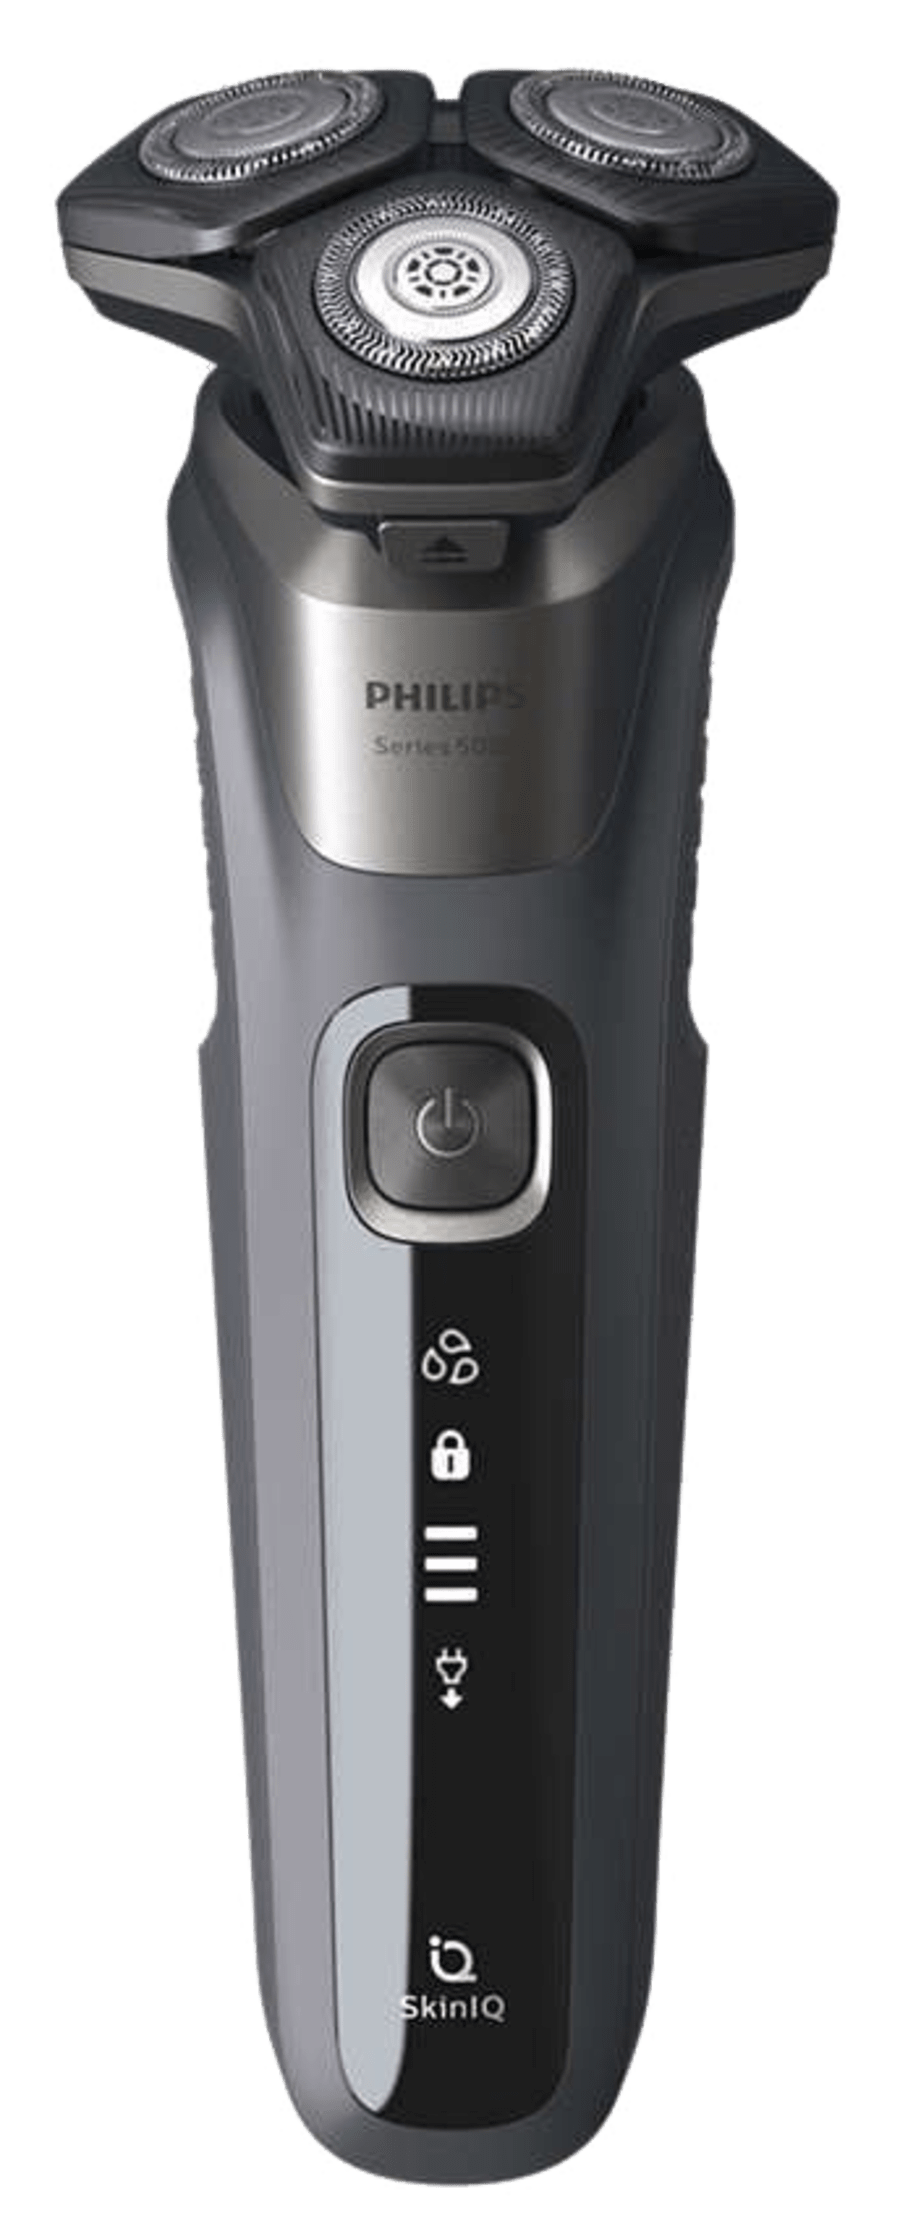 Philips rakvél 5000 series